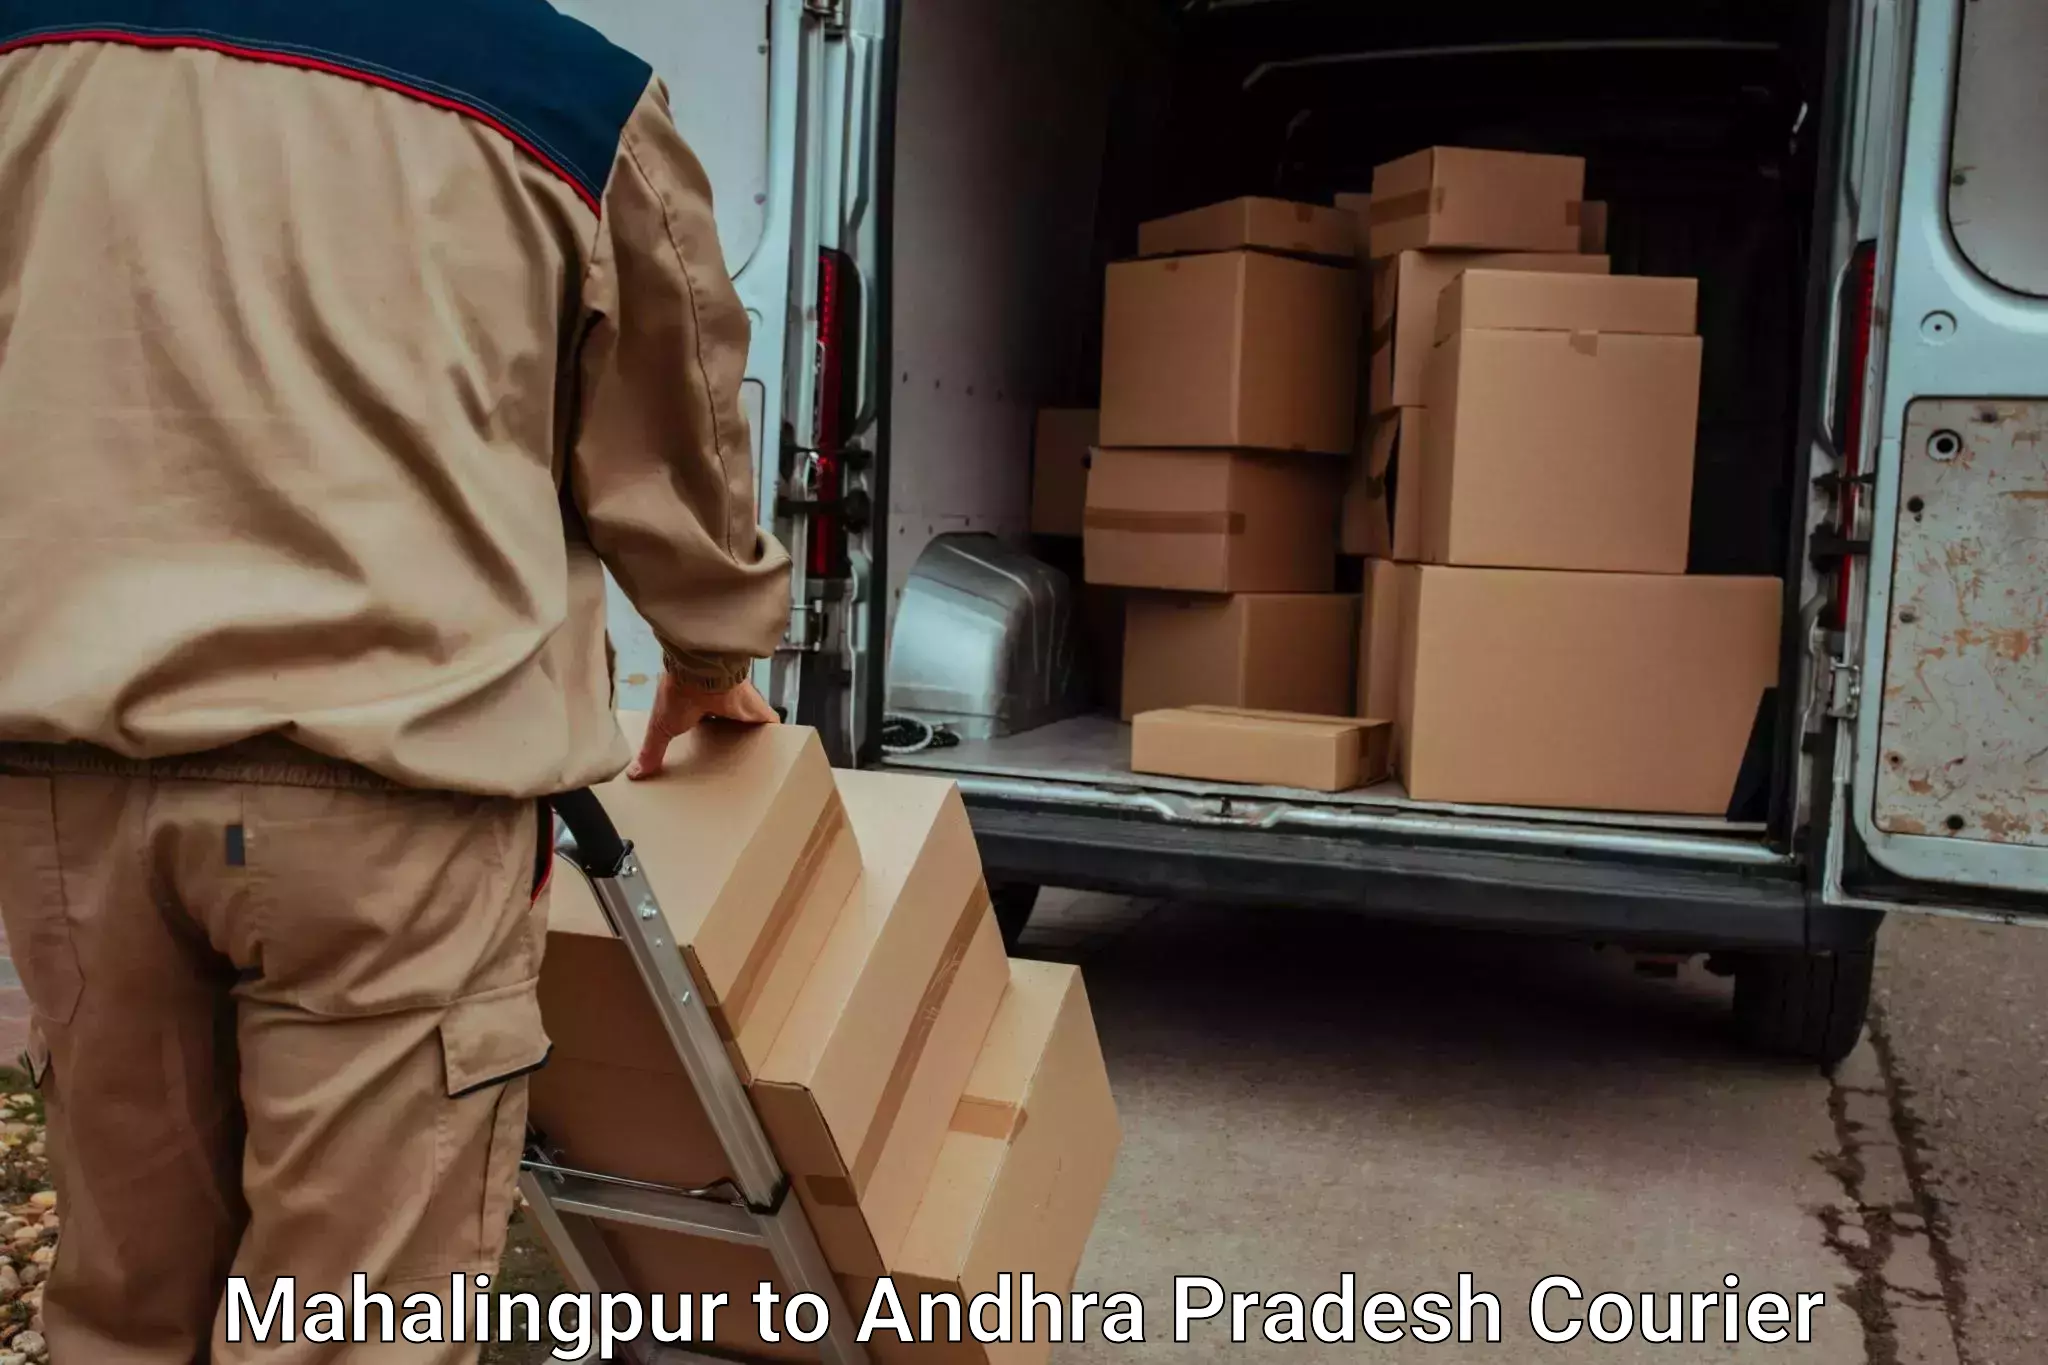 Luggage transport consulting in Mahalingpur to Chodavaram